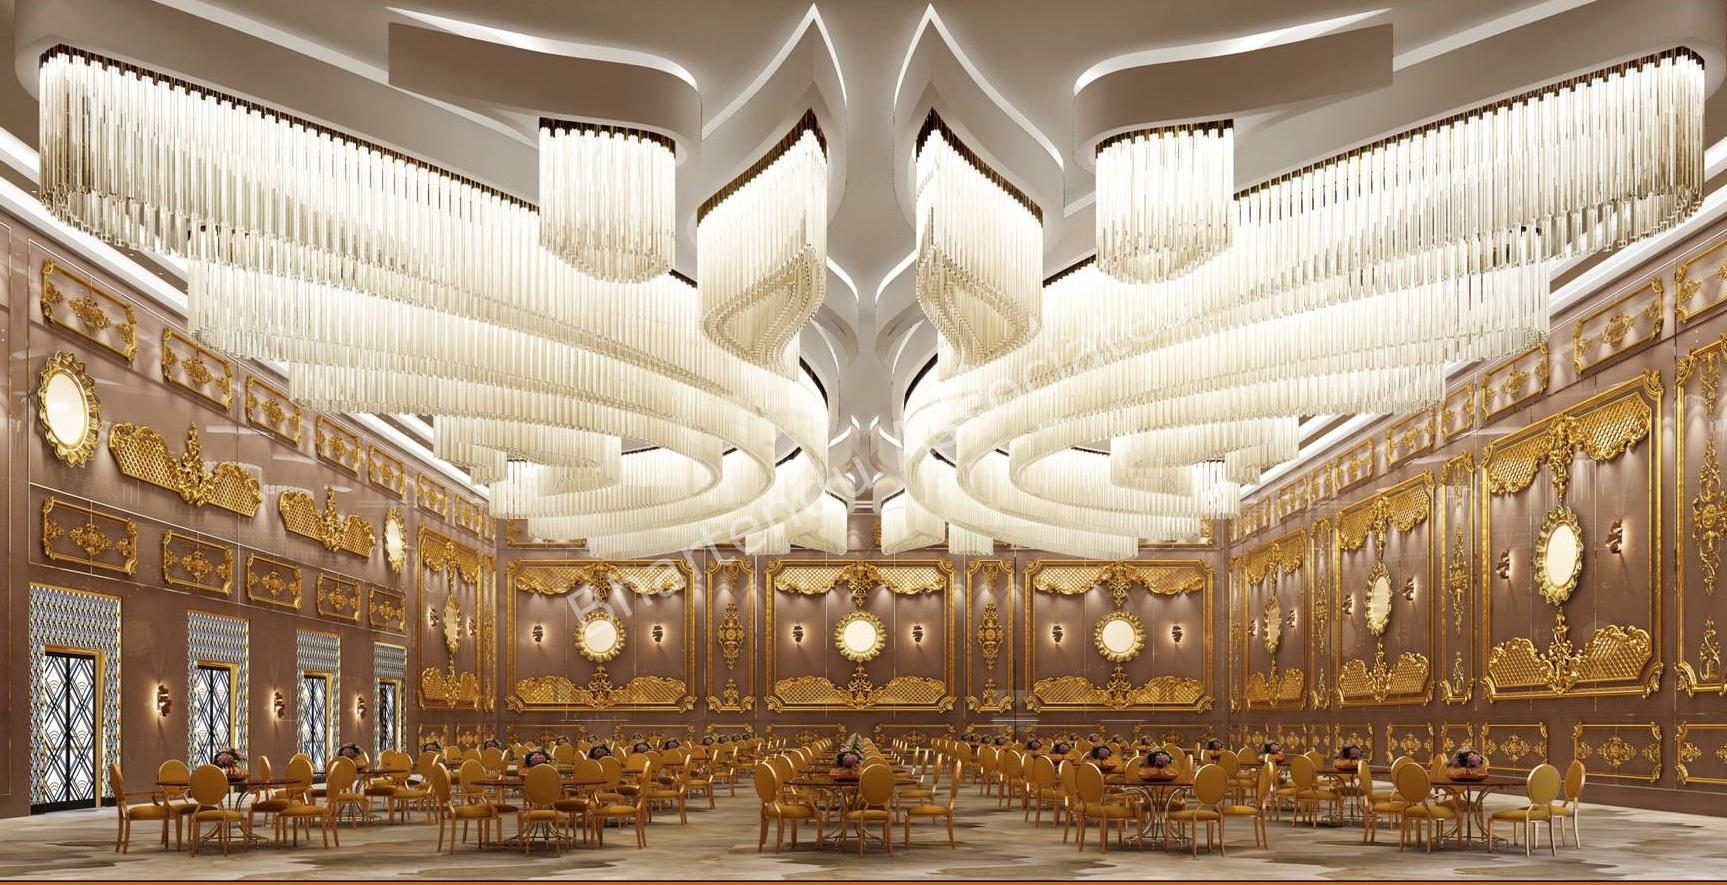 Banquet Hall Interior Design - Interior Designing for Banquet Hall ...